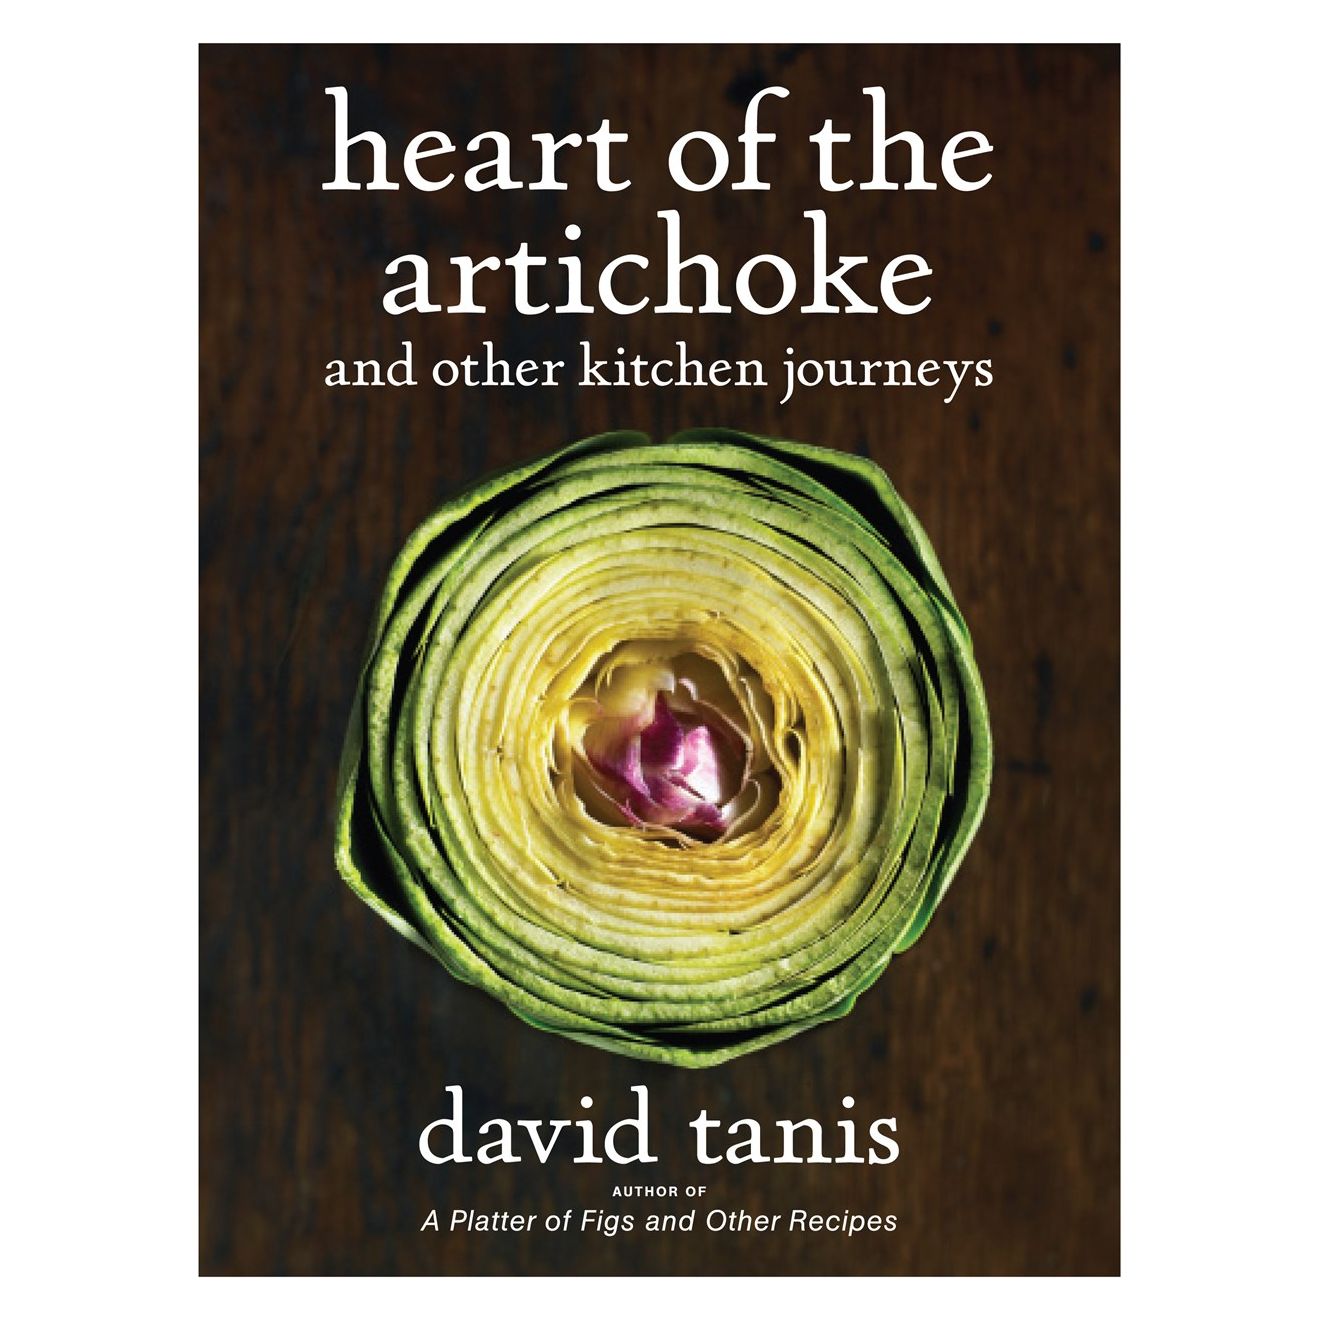 The Heart of the Artichoke (David Tanis)